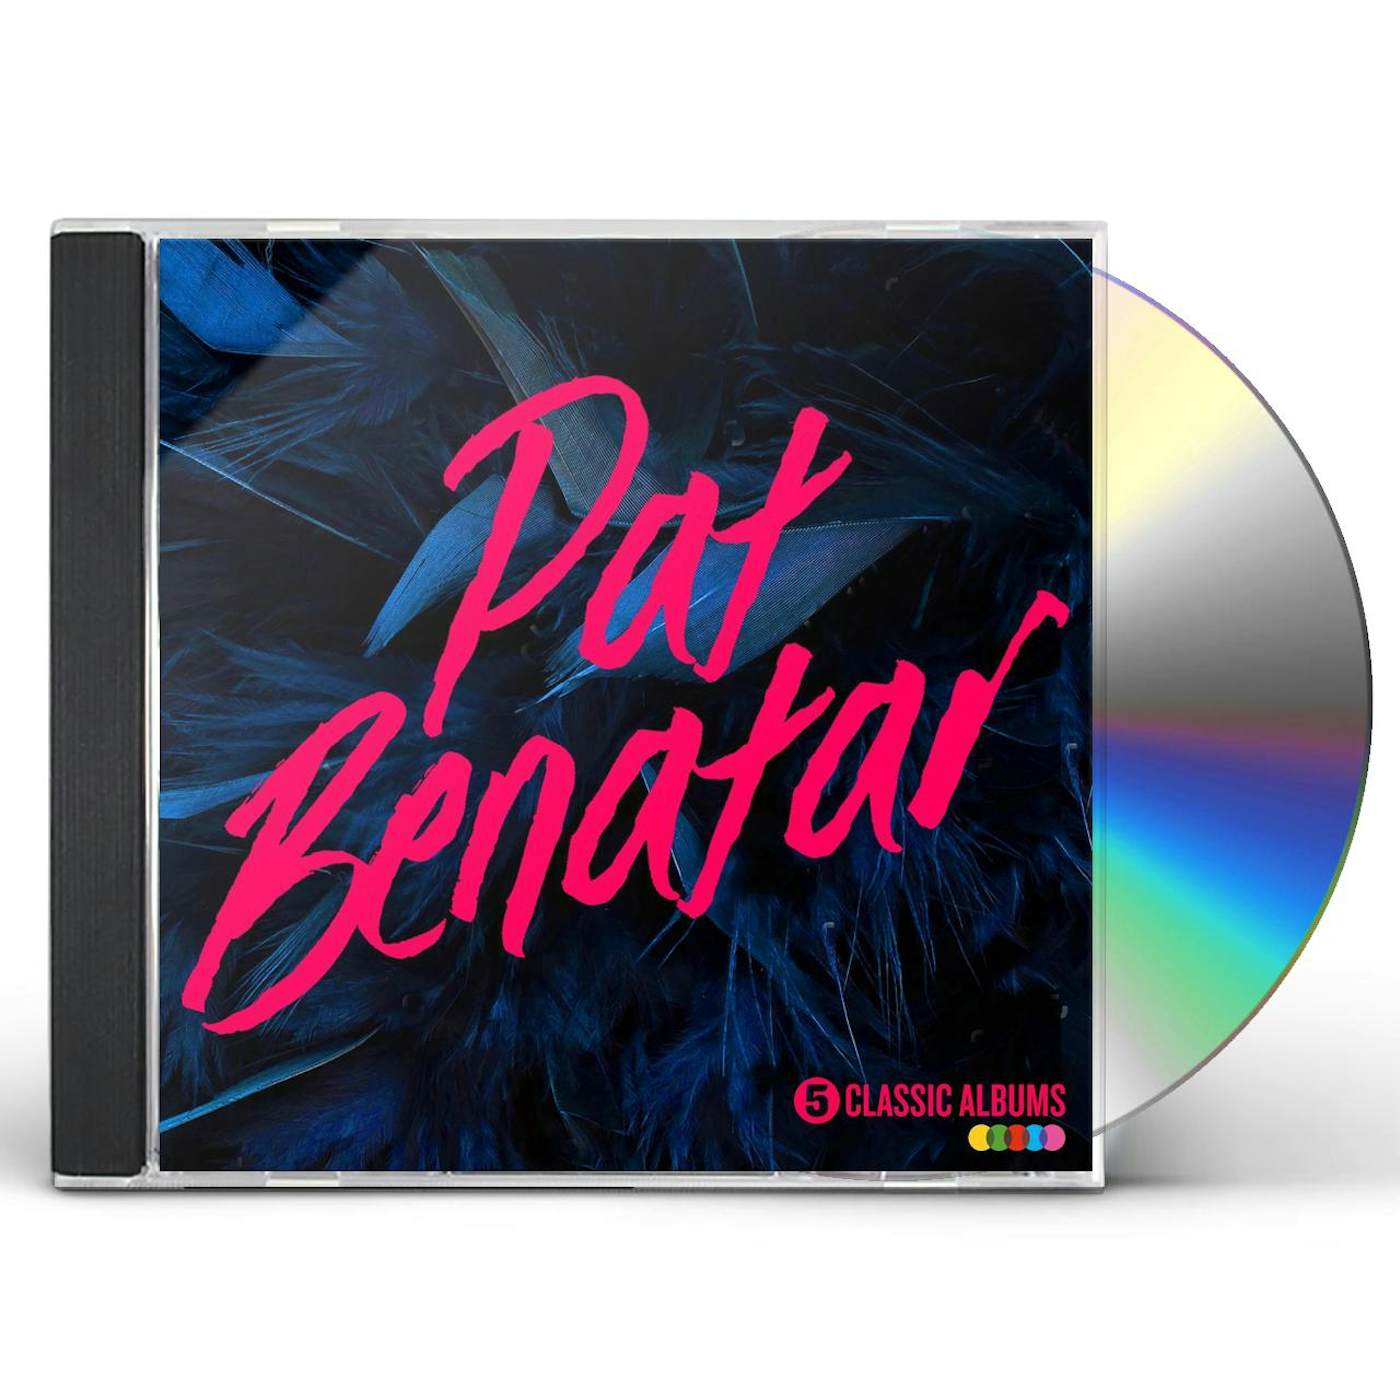 Pat Benatar 5 CLASSIC ALBUMS CD